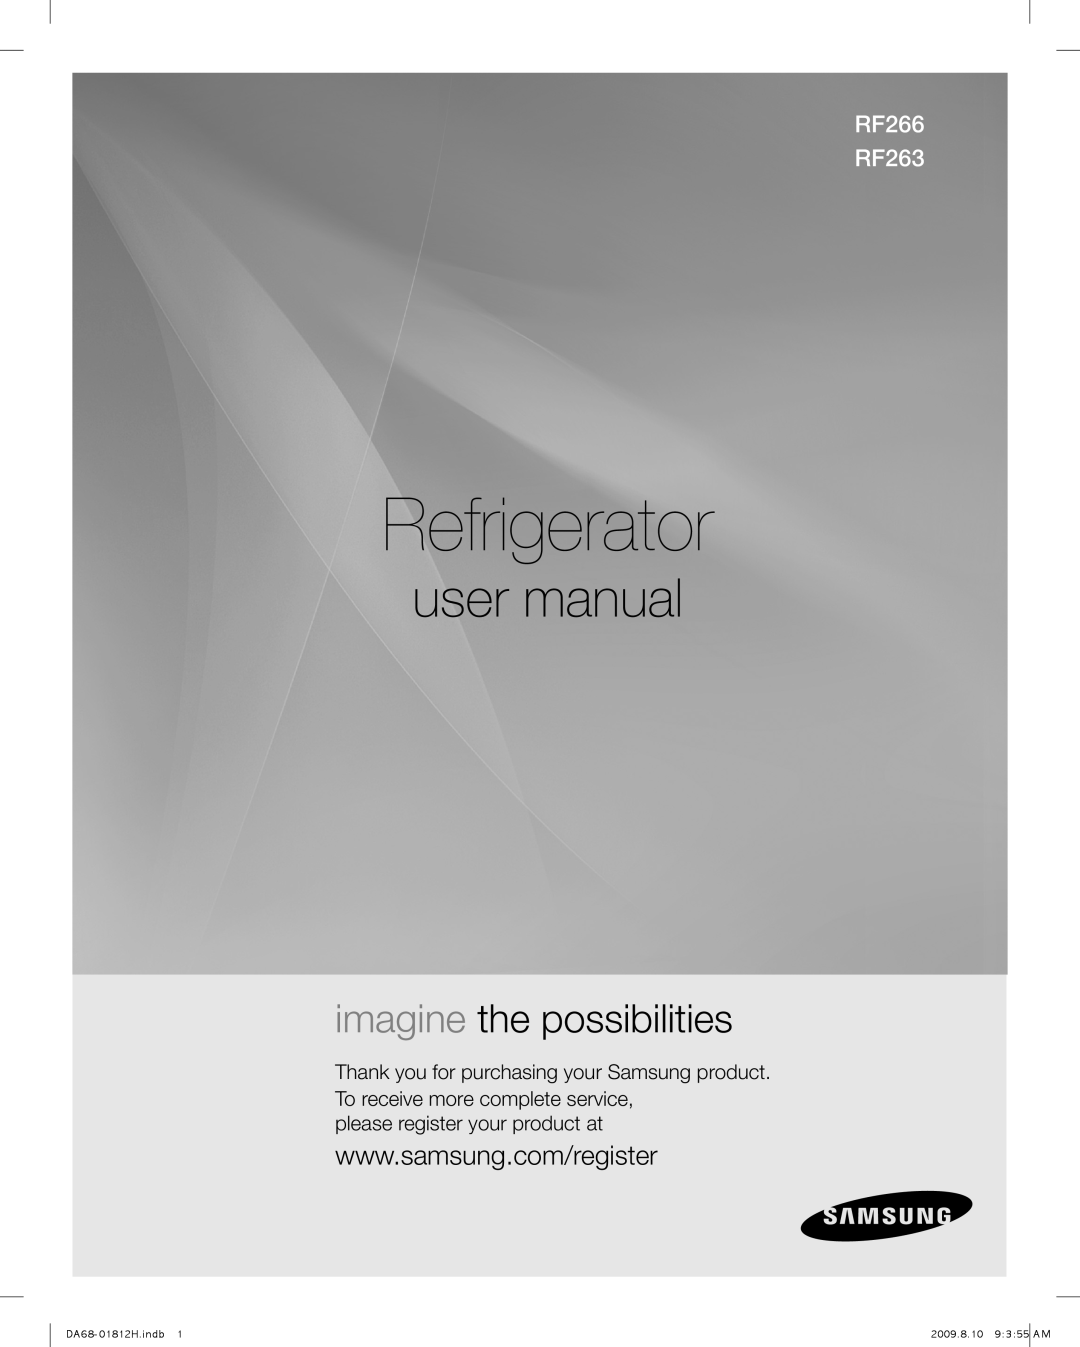 Samsung user manual Refrigerator, imagine the possibilities, RF266 RF263 